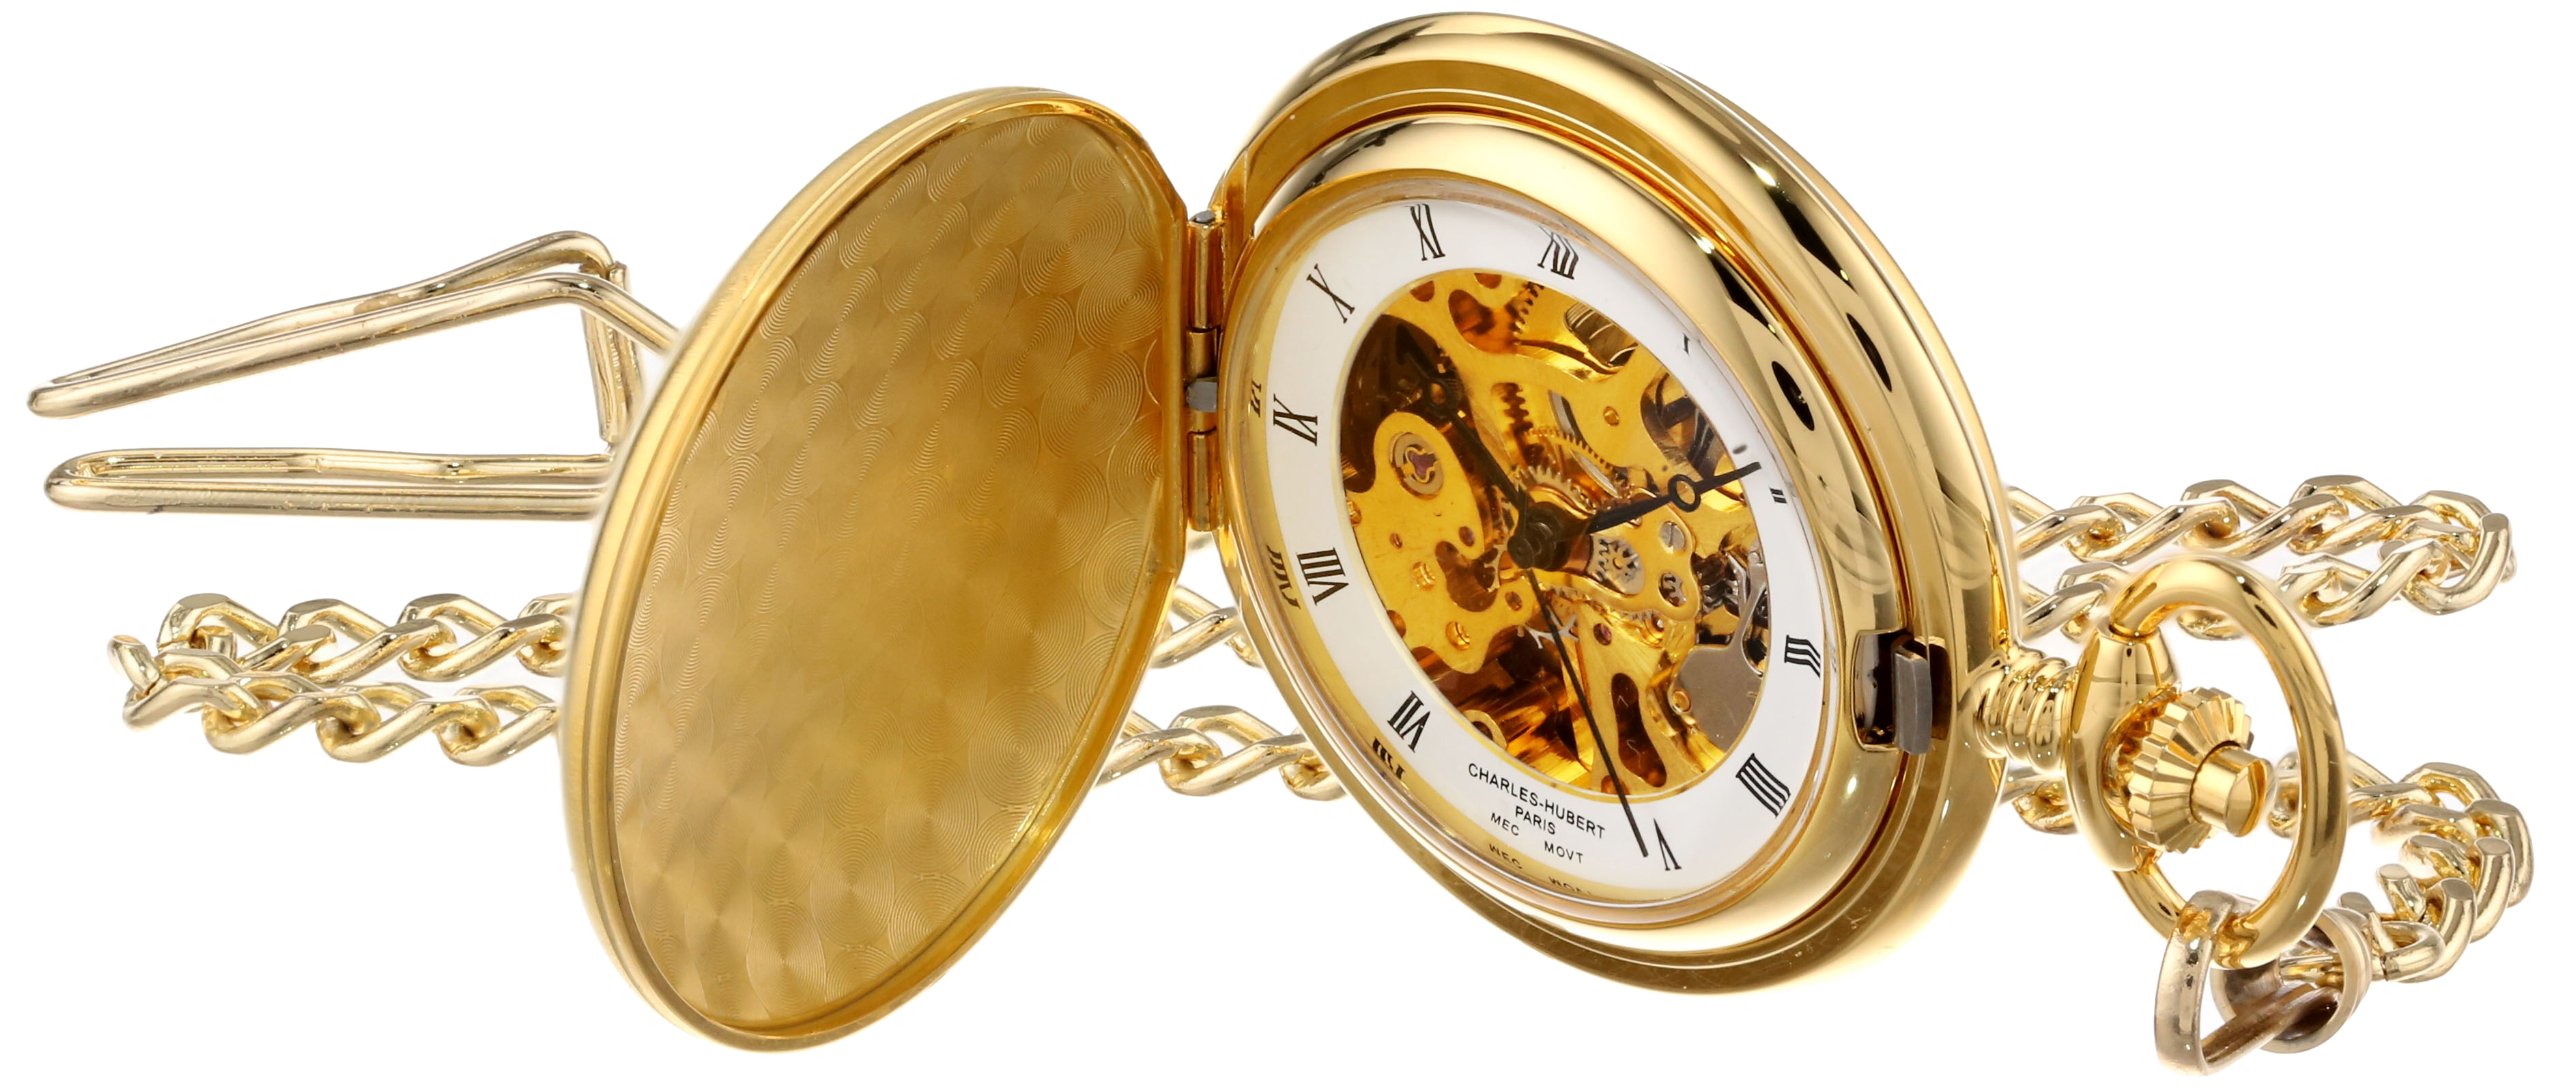 Charles-Hubert, Paris 3595 Gold-Plated Satin Finish Mechanical Pocket Watch